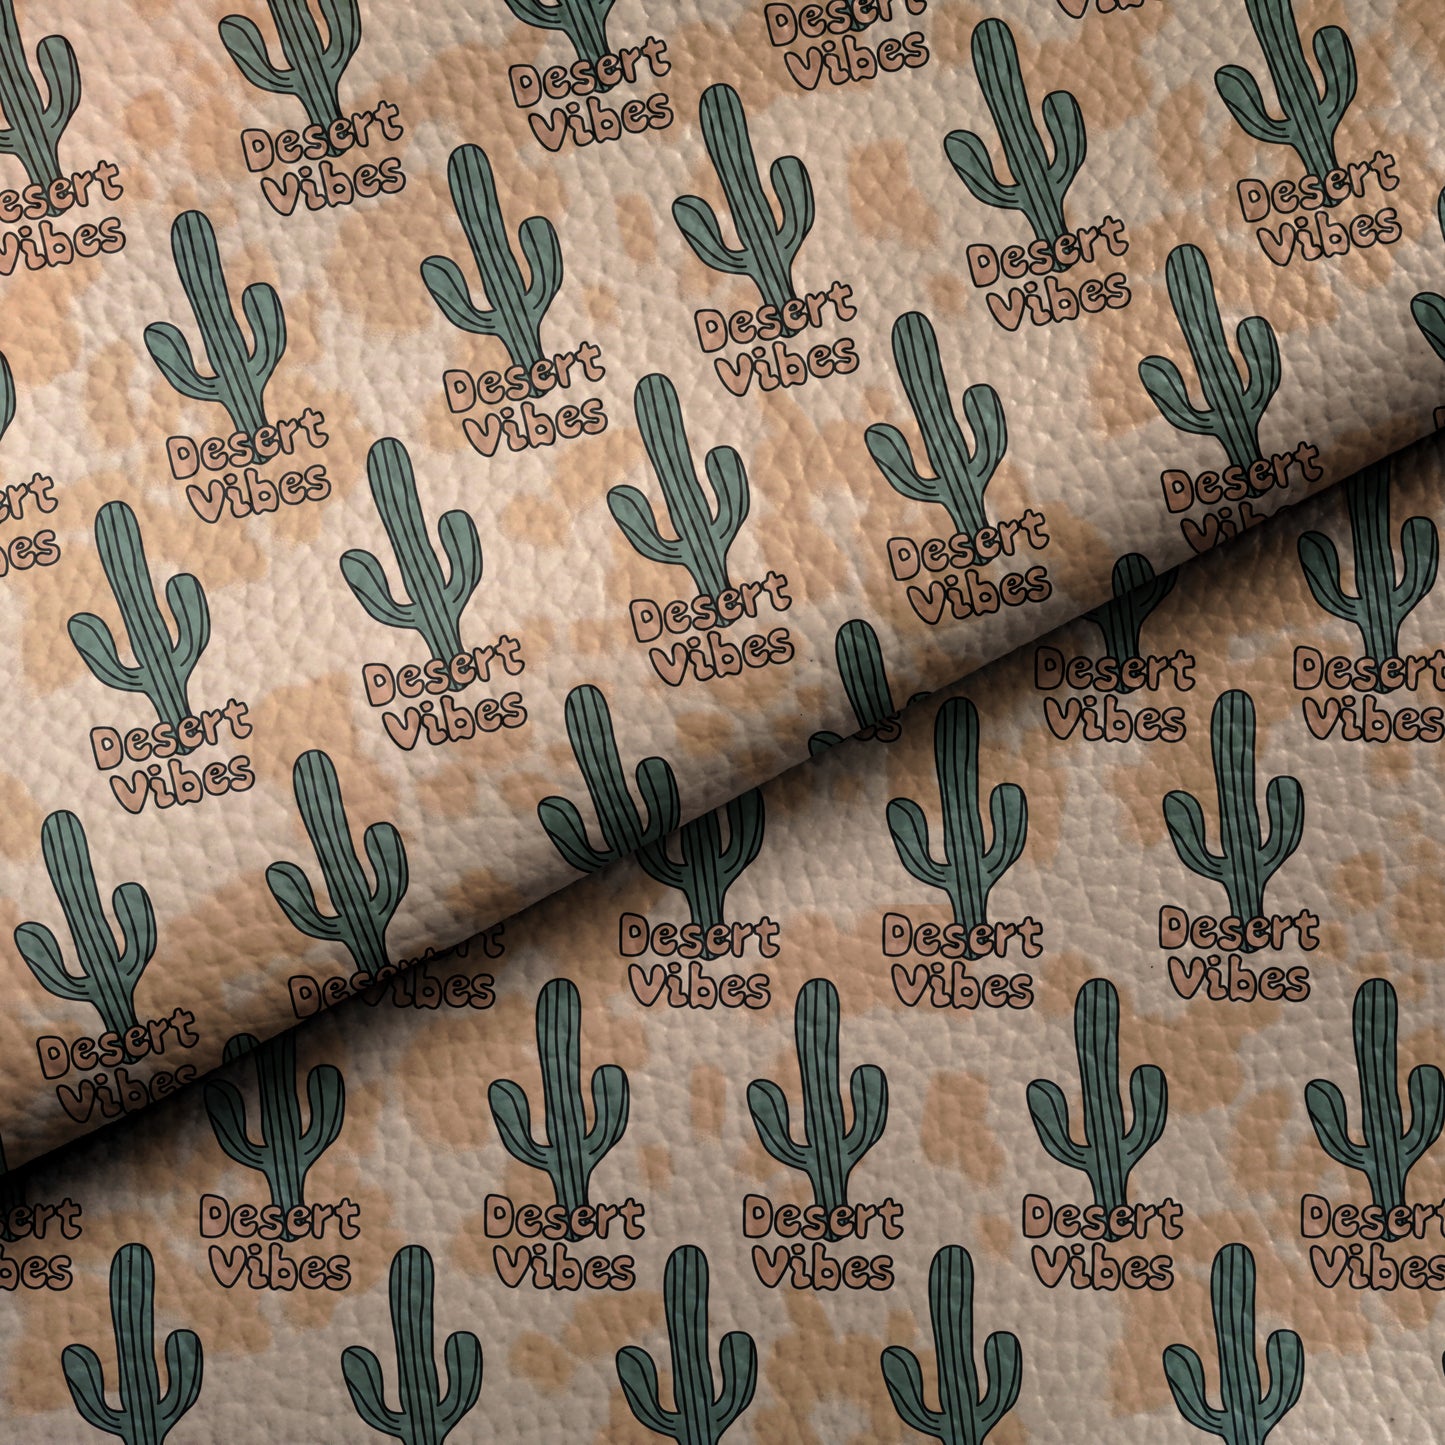 VID01002 - Saguaro Desert Vibes